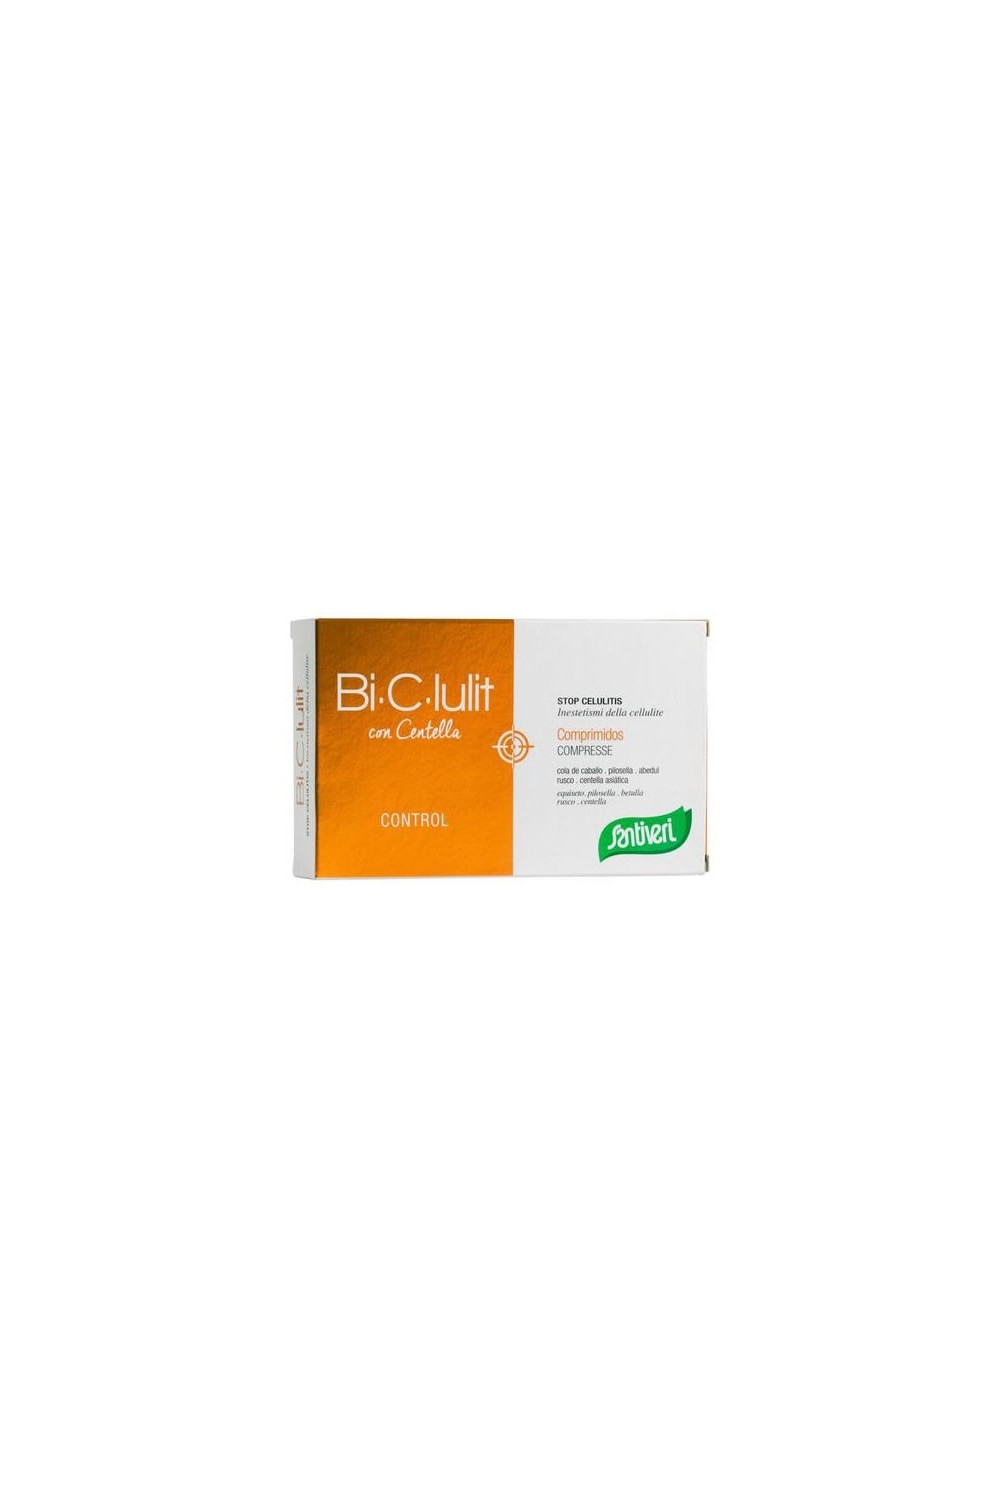 Santiveri Bi-C-Lulit 48 Tablets